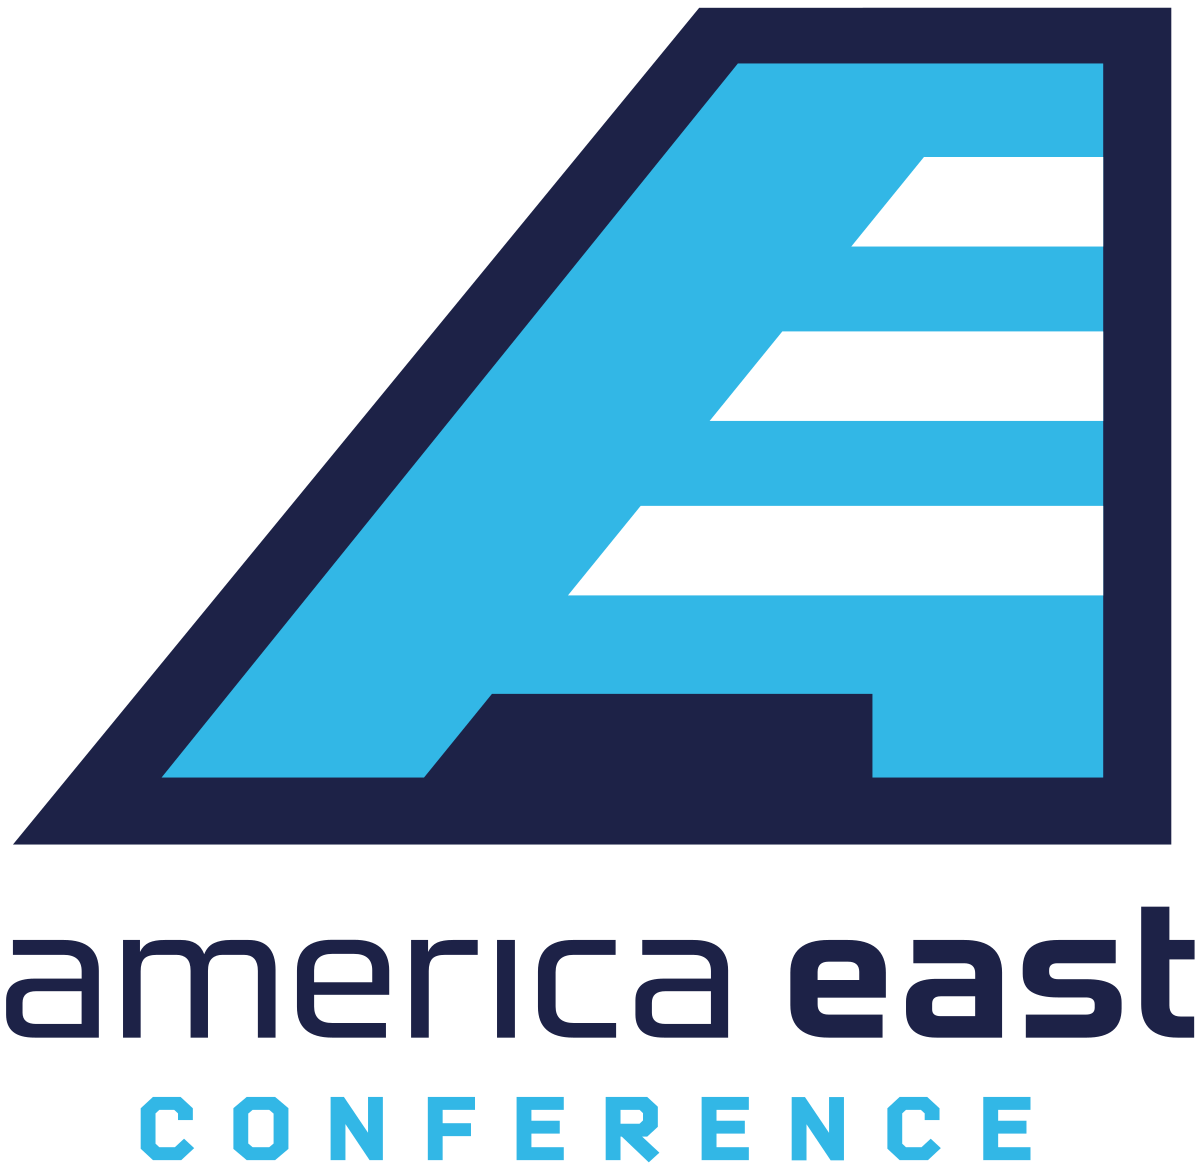 American NCAA Logo - NCAA Conference Logos Ranked